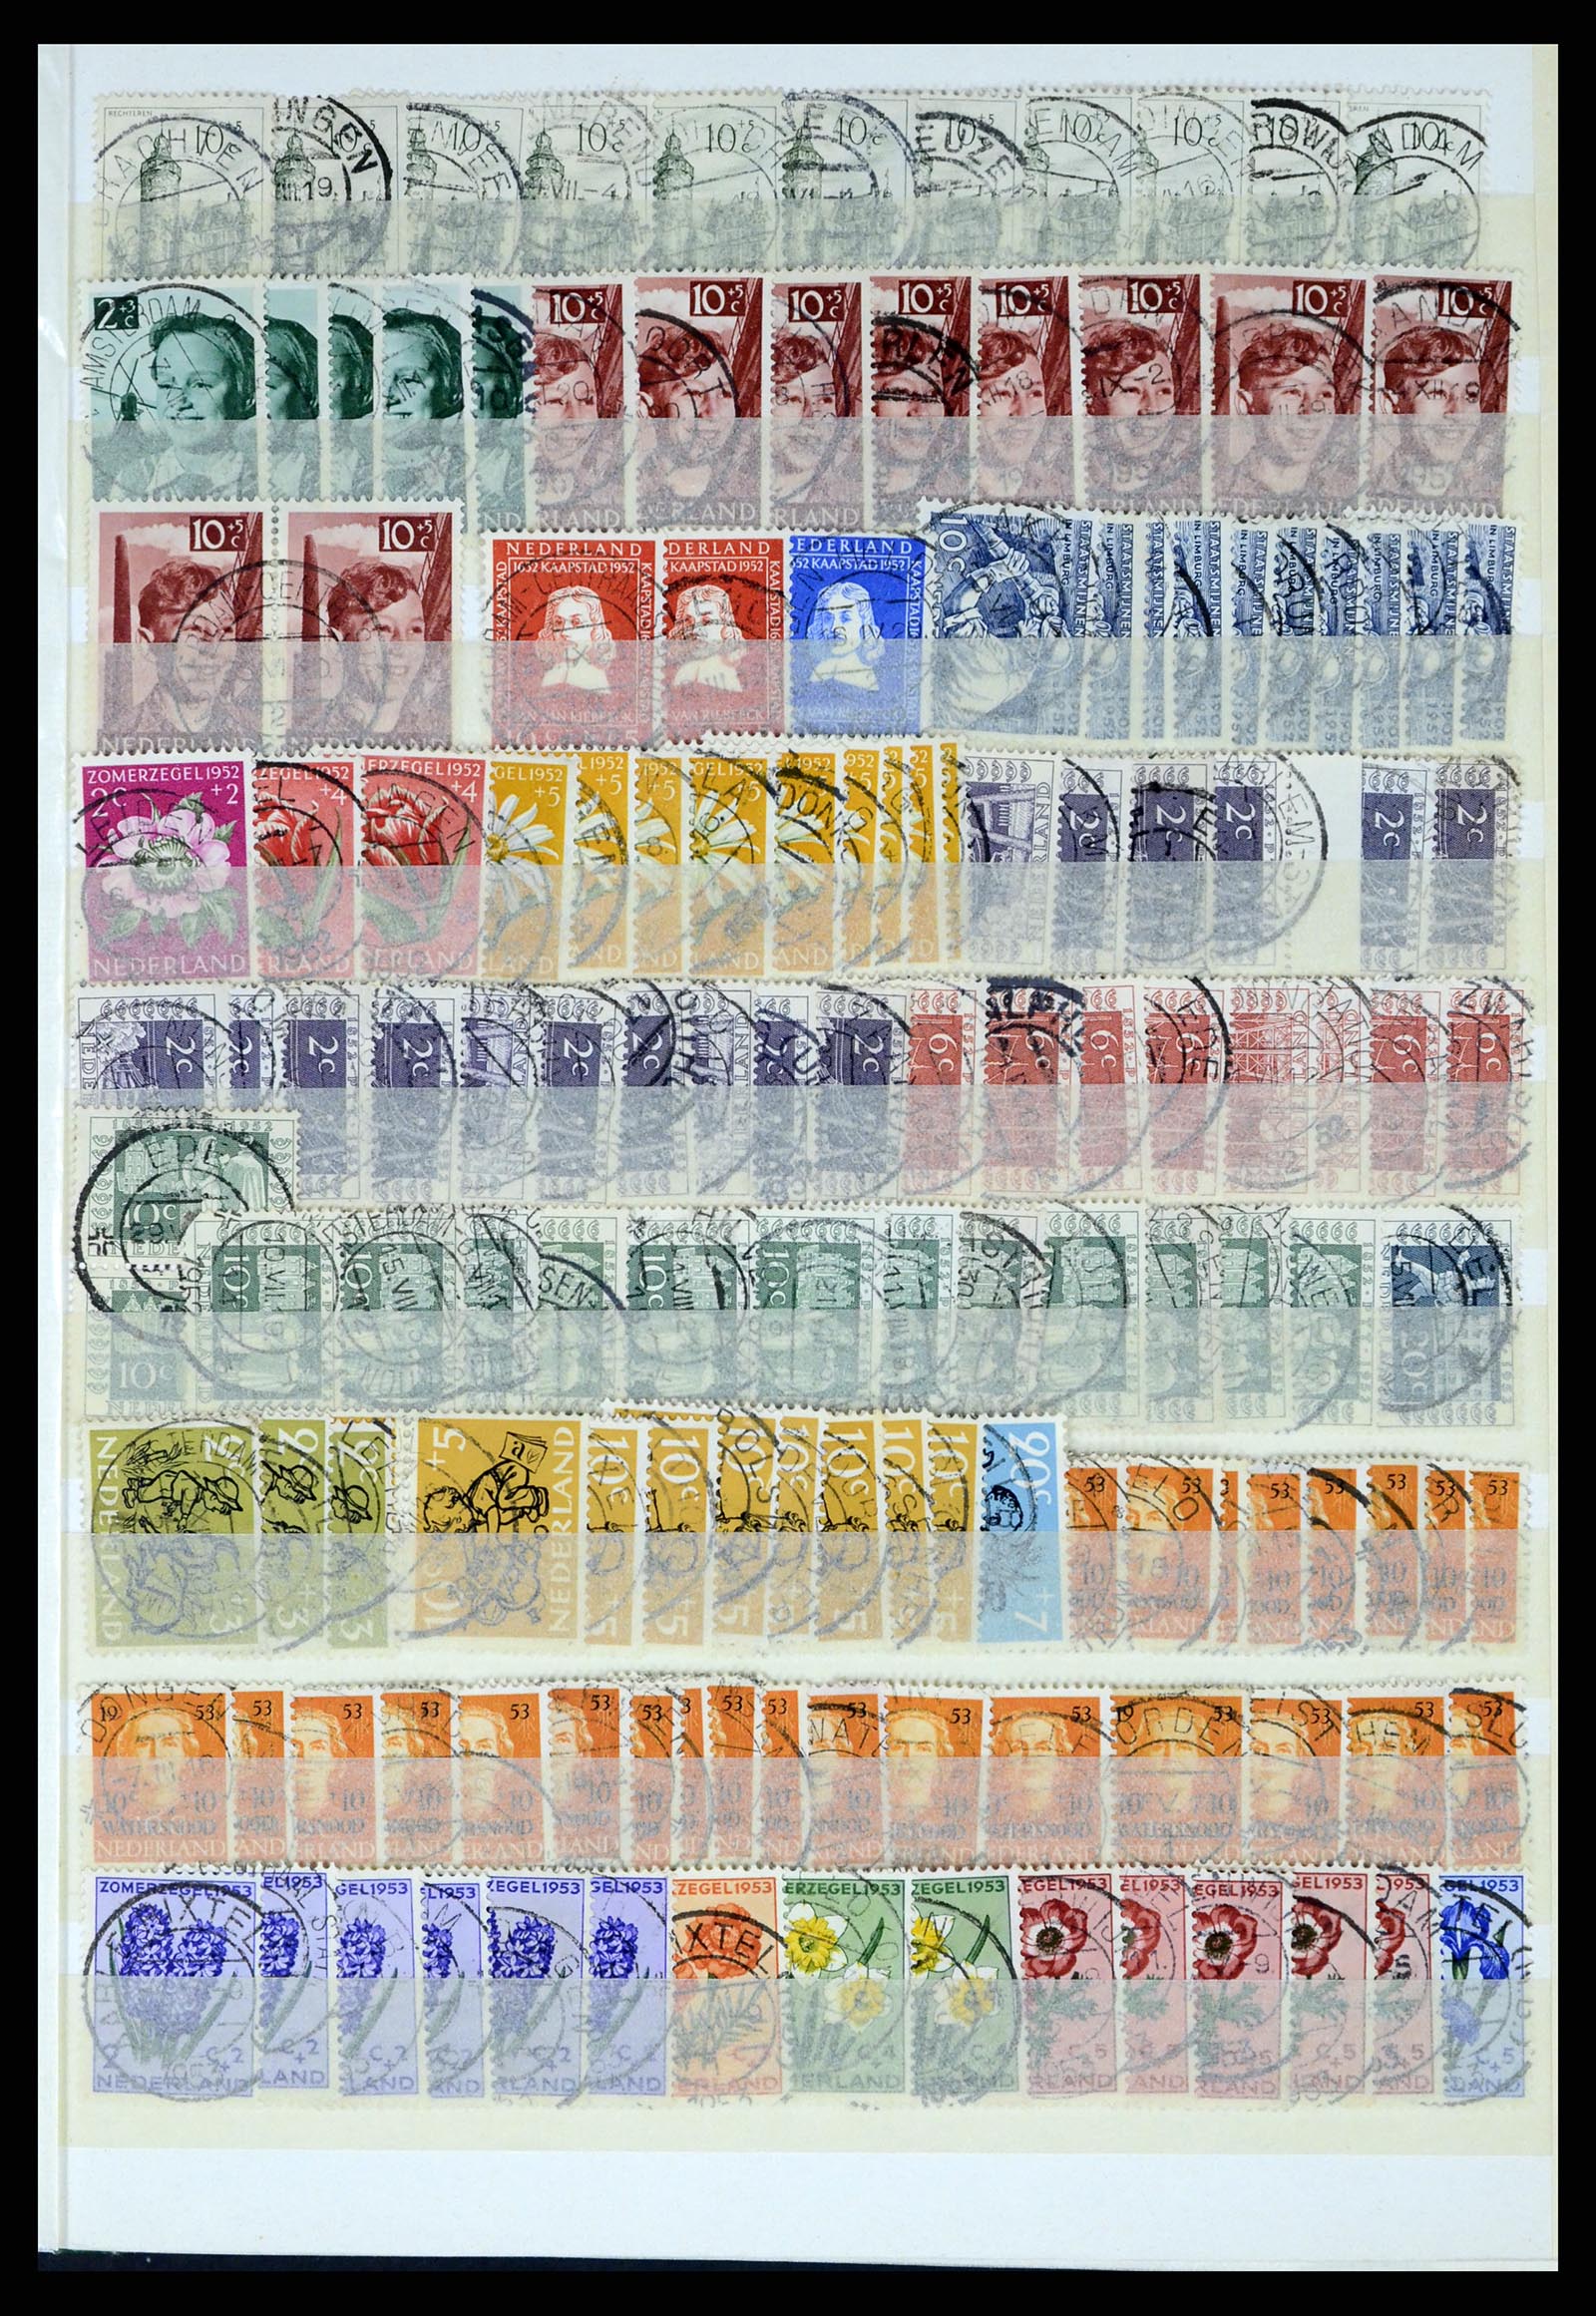 37424 047 - Stamp collection 37424 Netherlands shortbar cancels.